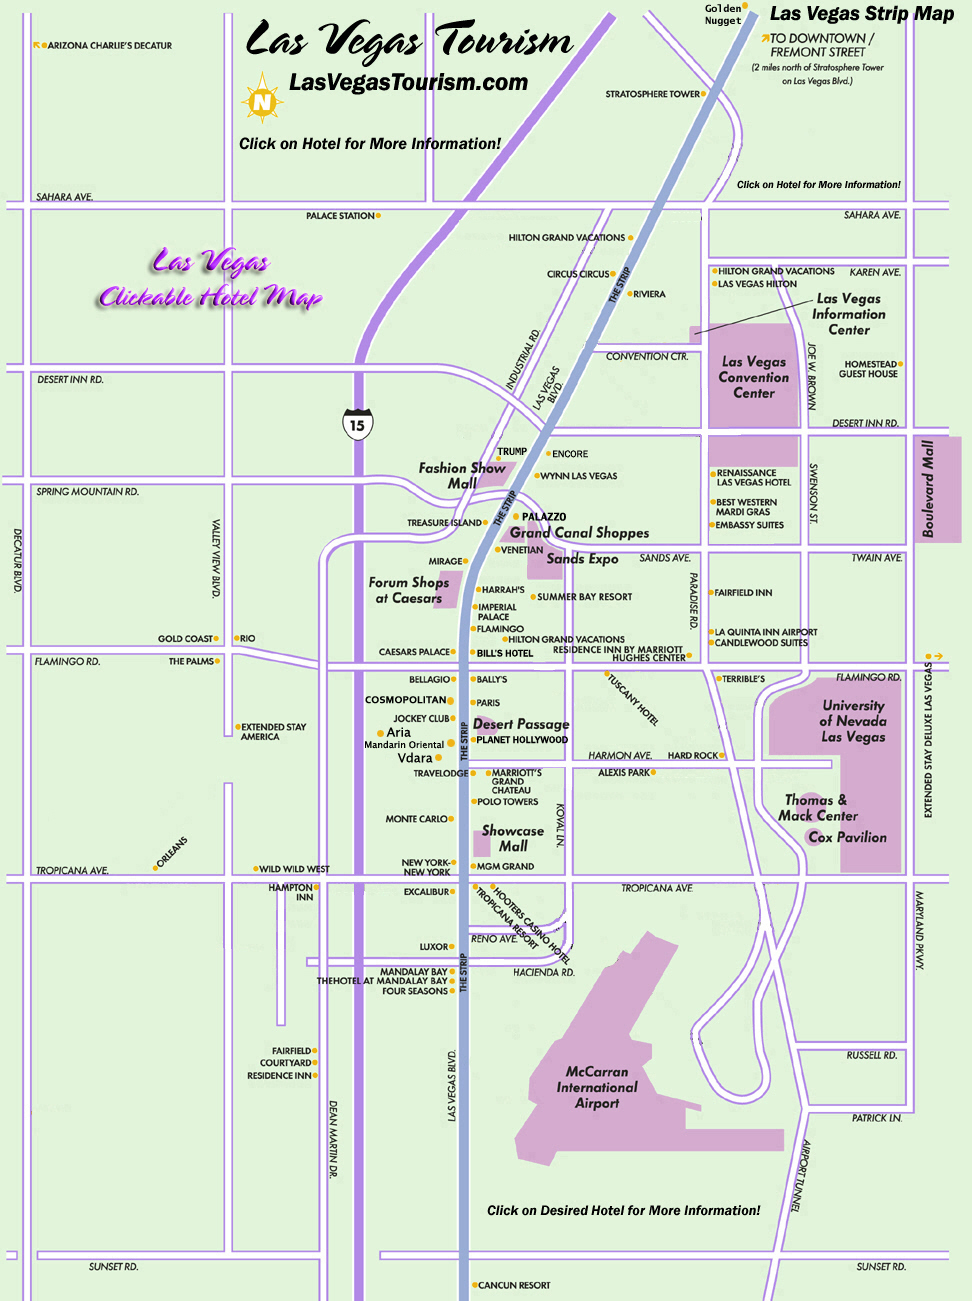 Las Vegas Map, Official Site - Las Vegas Strip Map - Printable Map Of Las Vegas Strip